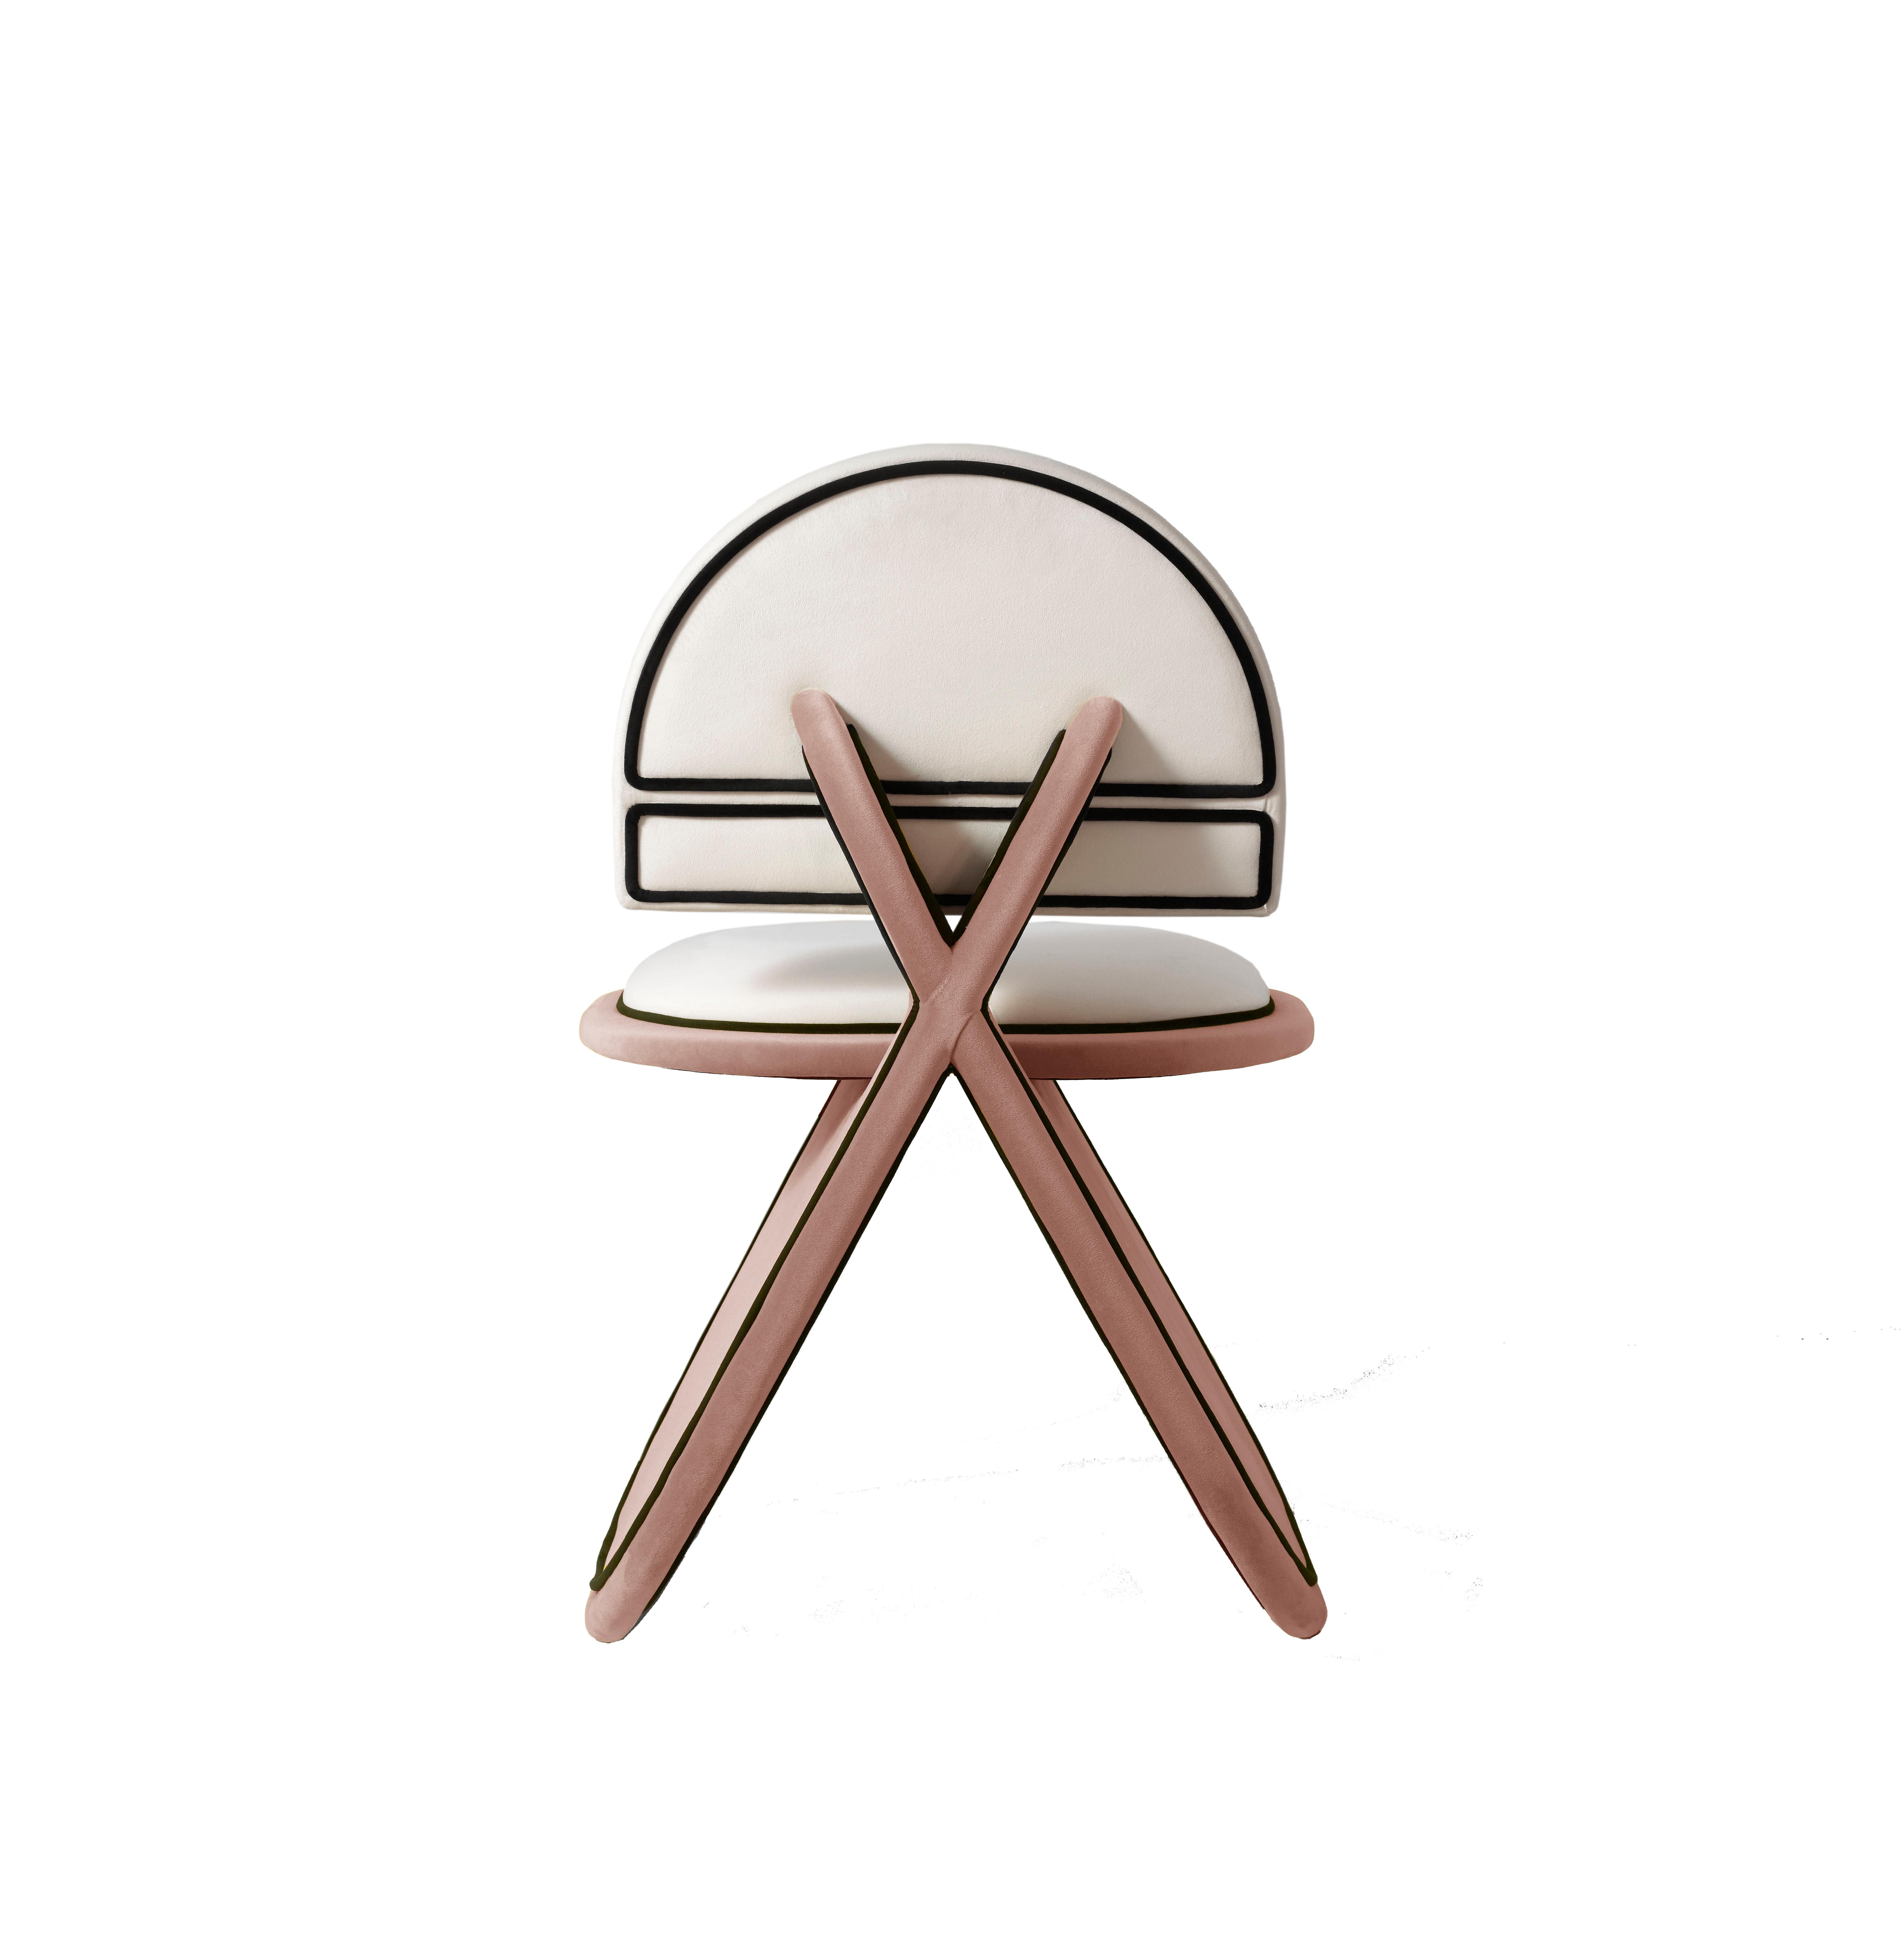 Art Deco Chair Armchair Velvet Nude Dovain Studio Design Sergio Prieto Deco Upholstered For Sale